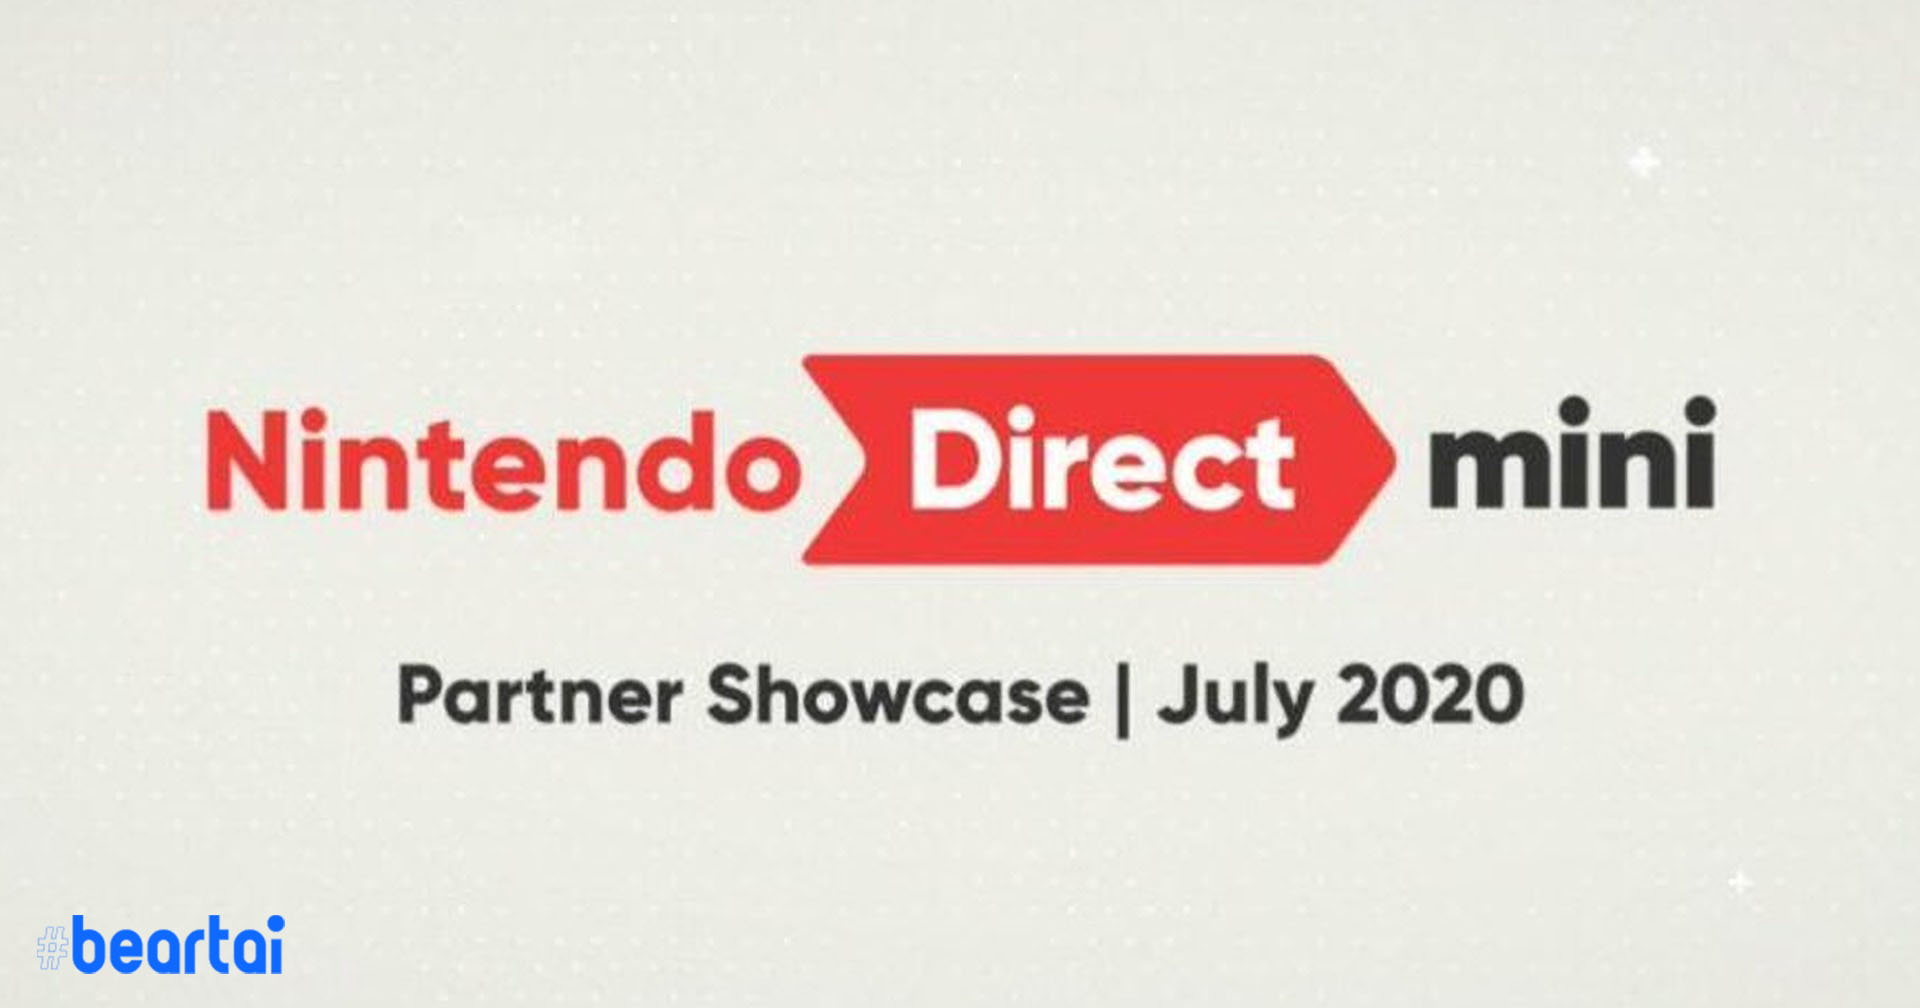 Nintendo Direct Mini: Partner Showcase เดือนกรกฎาคม 2020